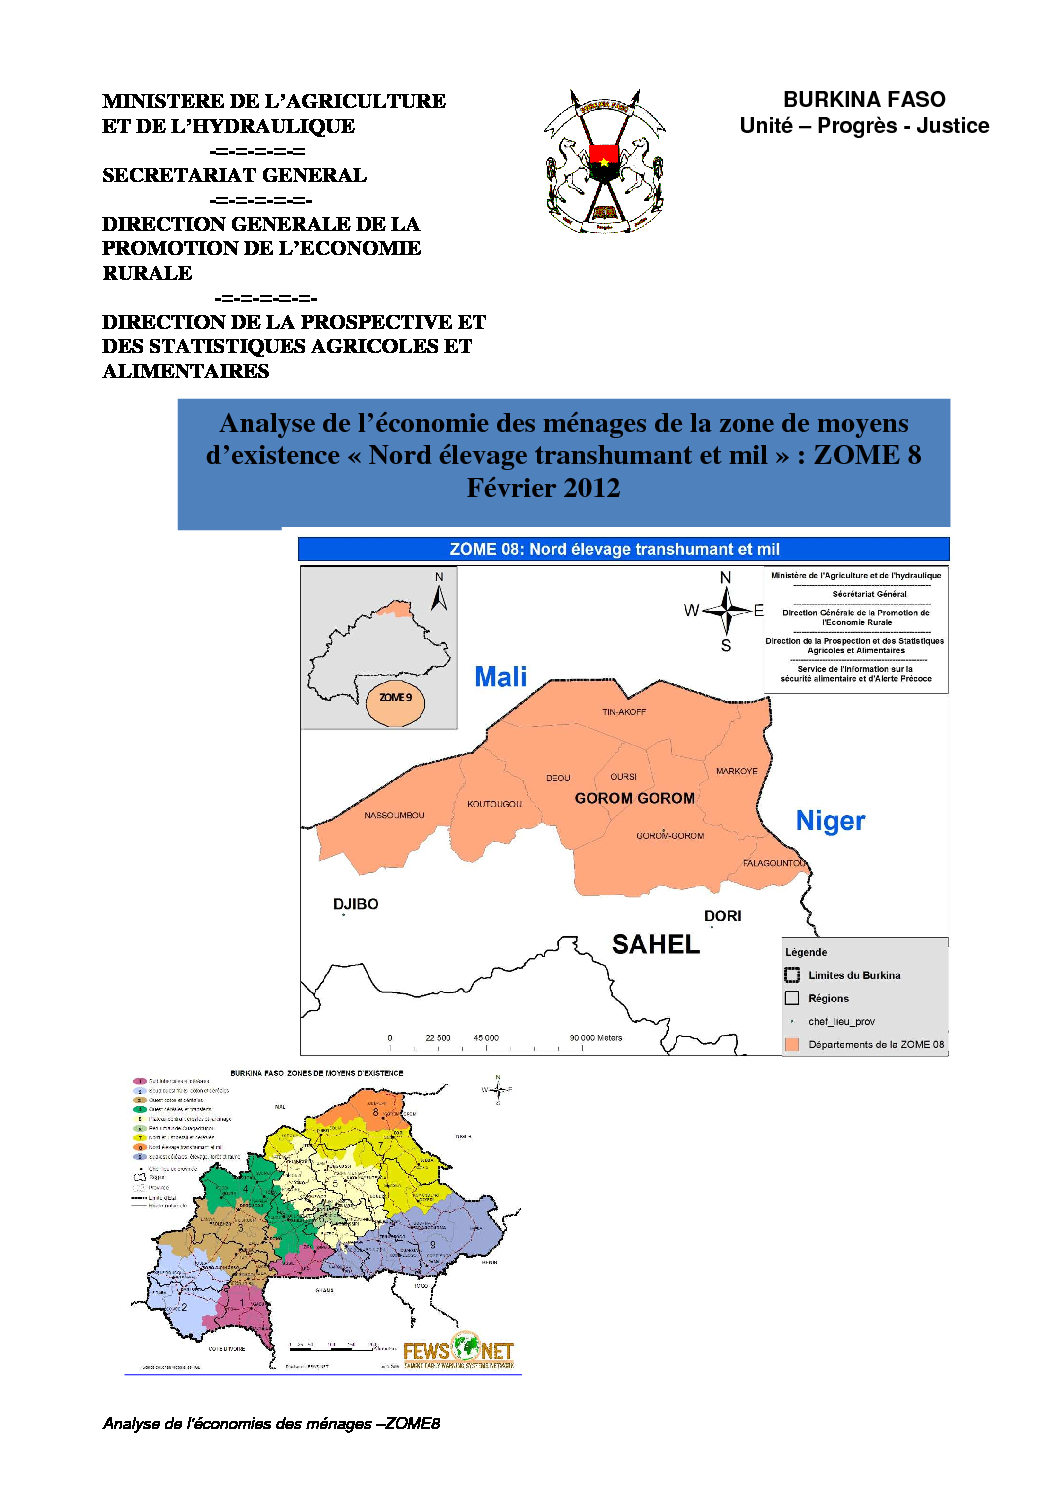 Profil Burkina Faso - ZOME 8 - Fevrier 2012